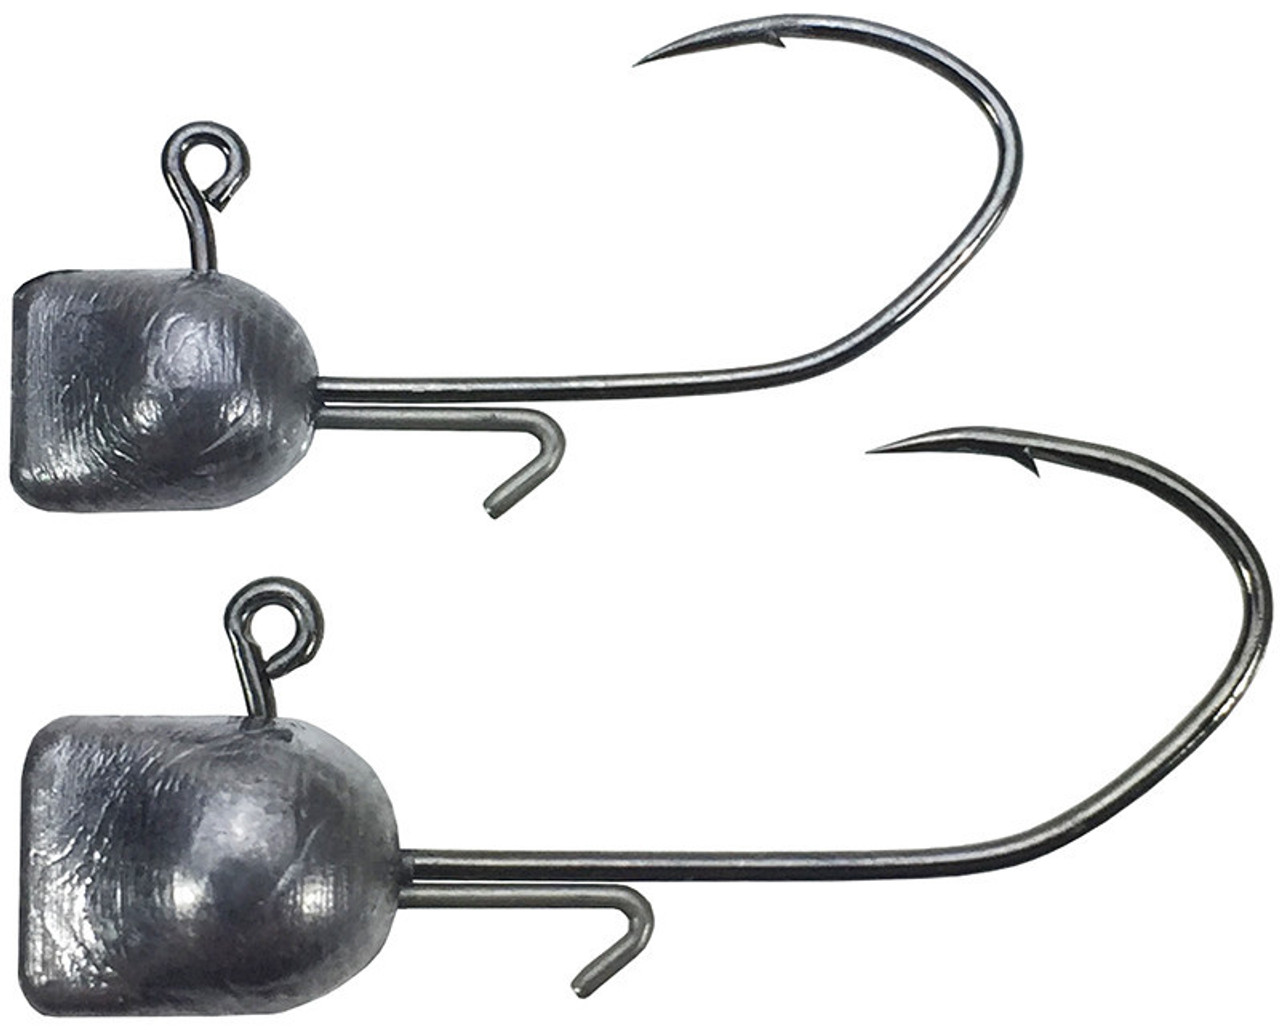 Owner 5316 Jig Hook Sizes 1 - 2/0 - Barlow's Tackle